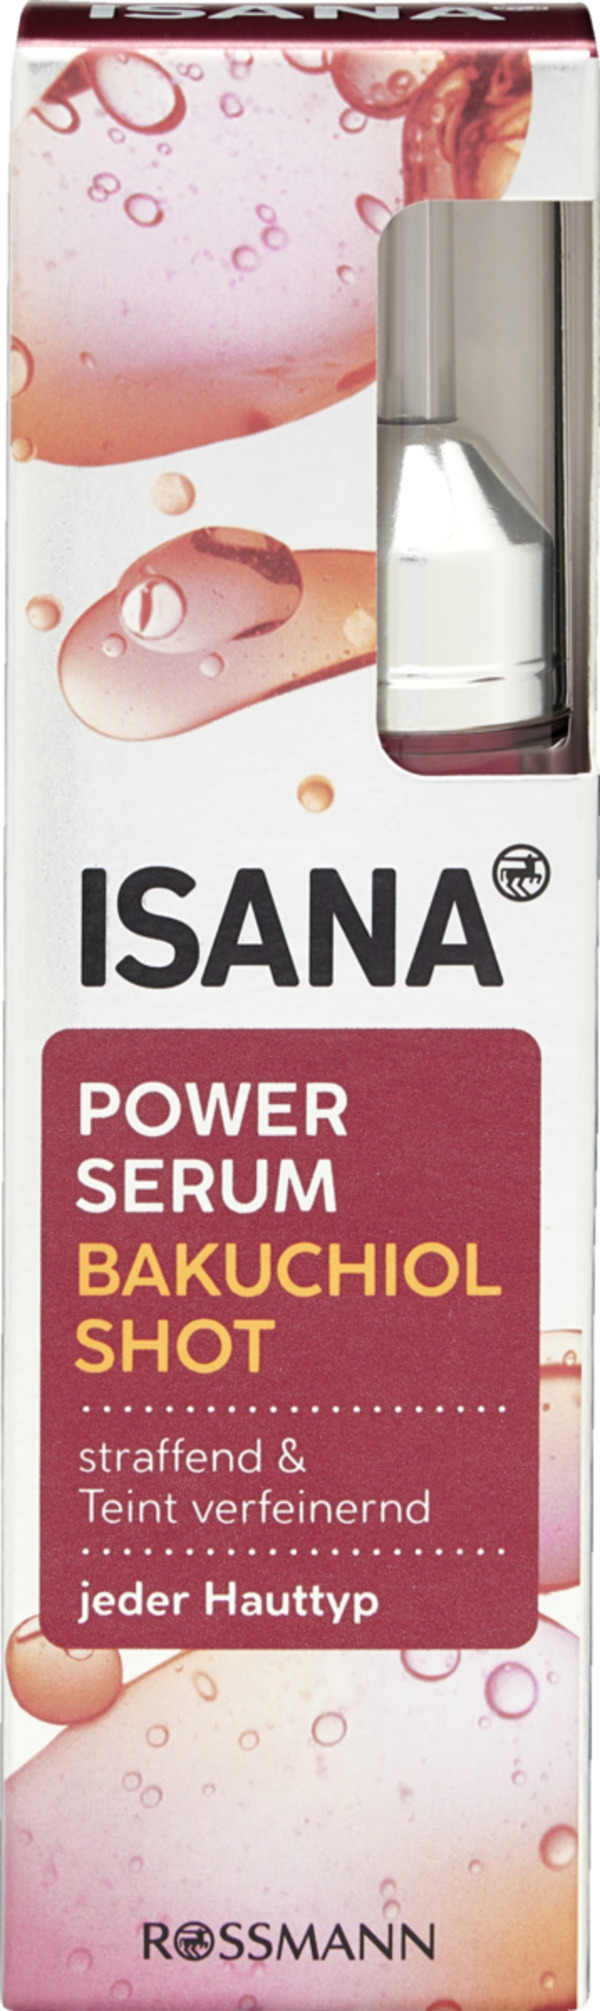 Bild 1 von ISANA Power Serum Retinol Shot